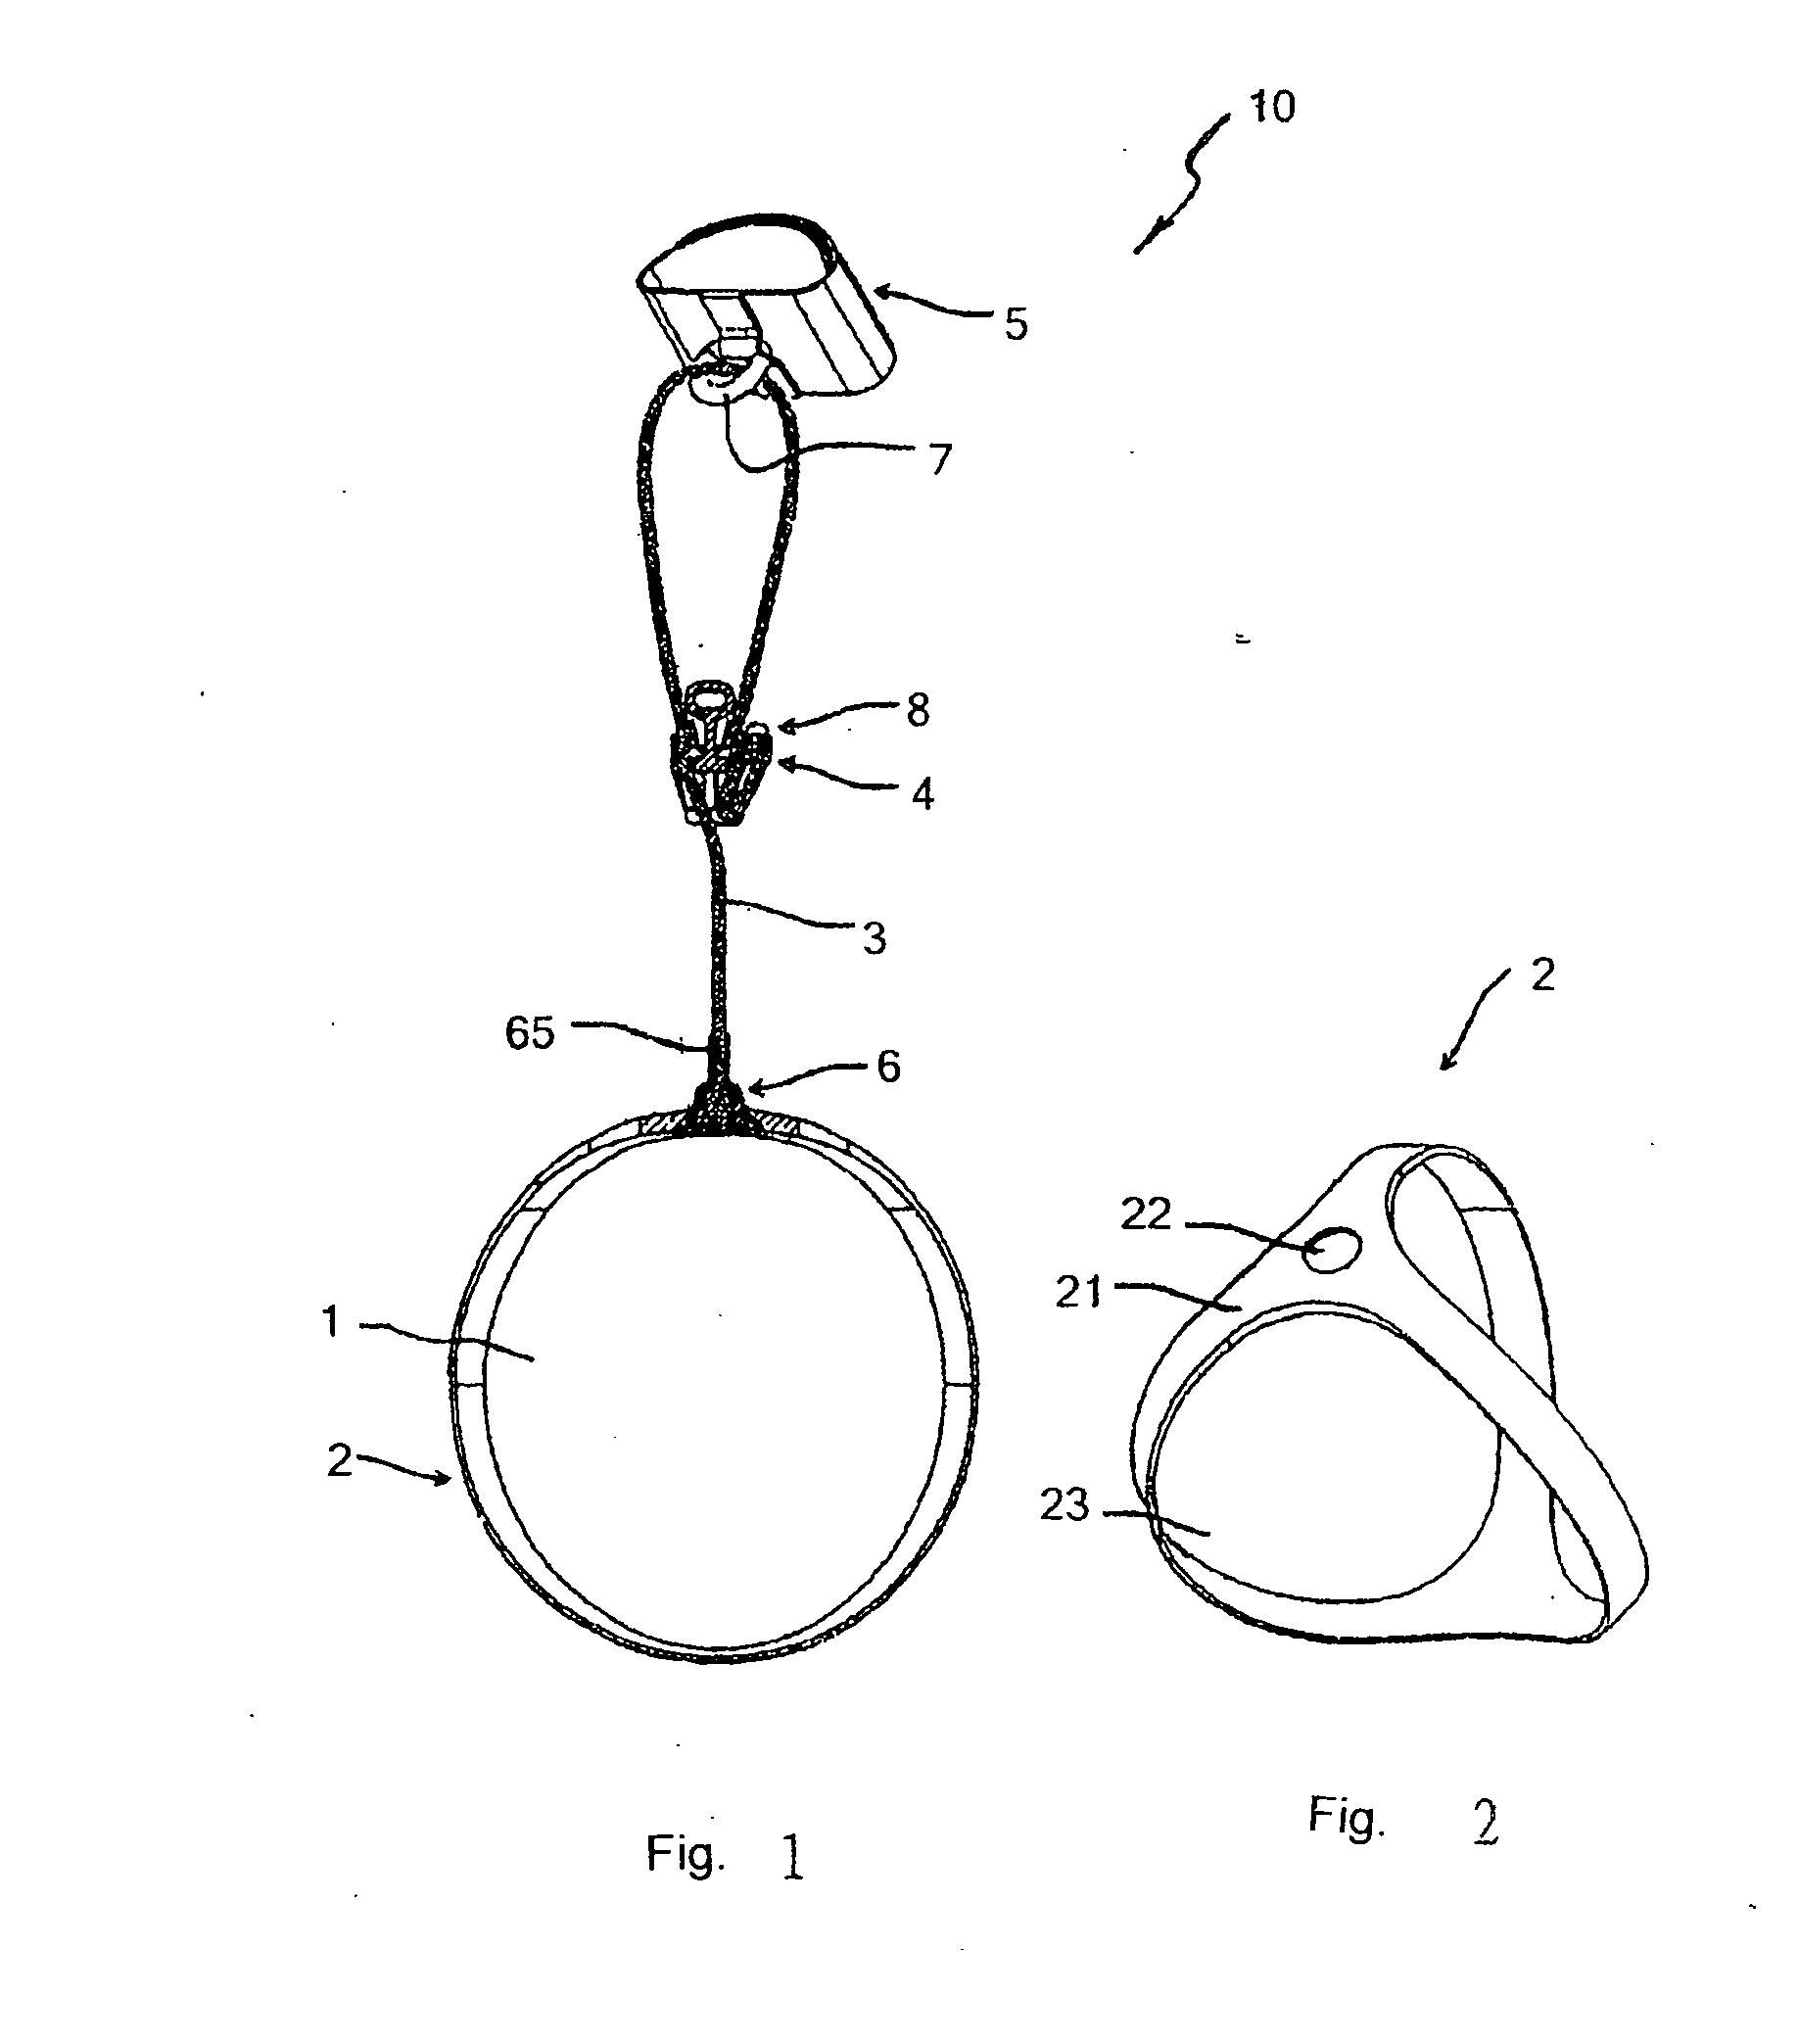 Ball training apparatus